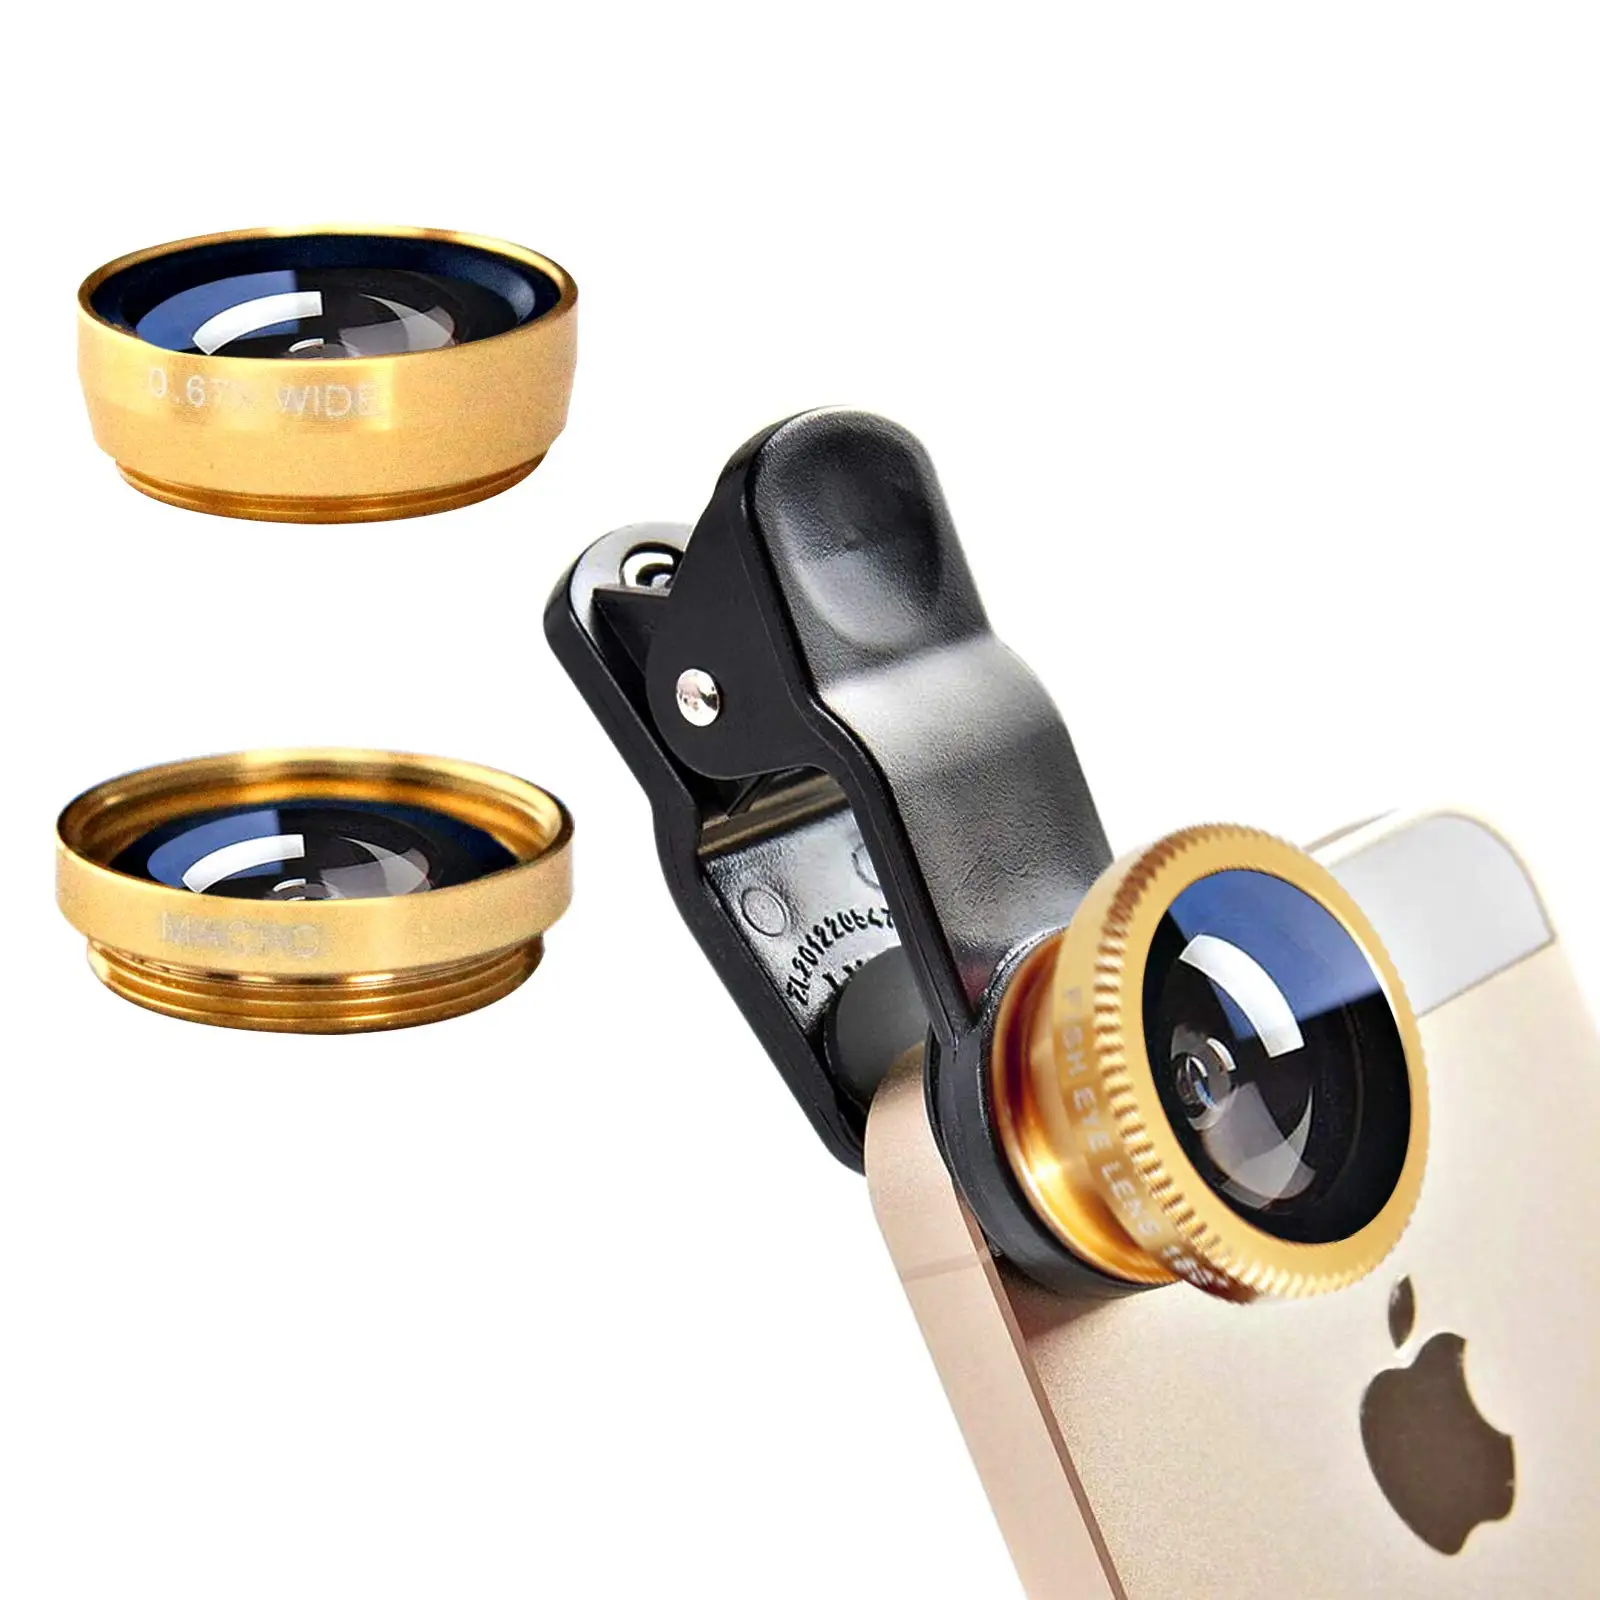 

3-in-1 Wide Angle Macro Fisheye Lens Camera Kits Mobile Phone Fish Eye Lenses